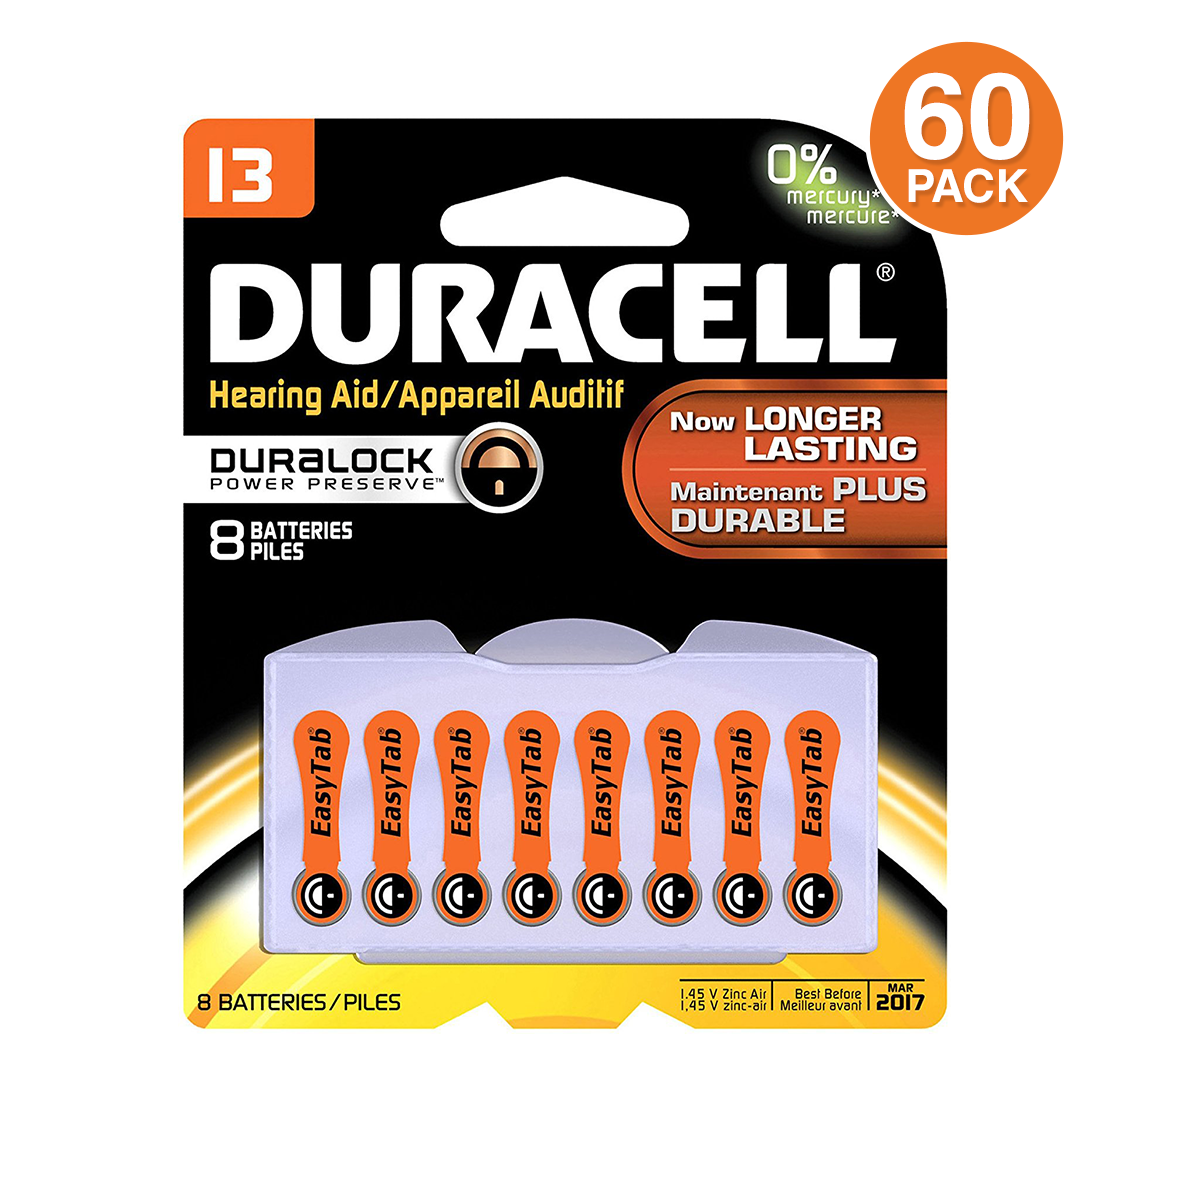 Duracell Activair 13 Hearing Aid Battery (60 PCS) 